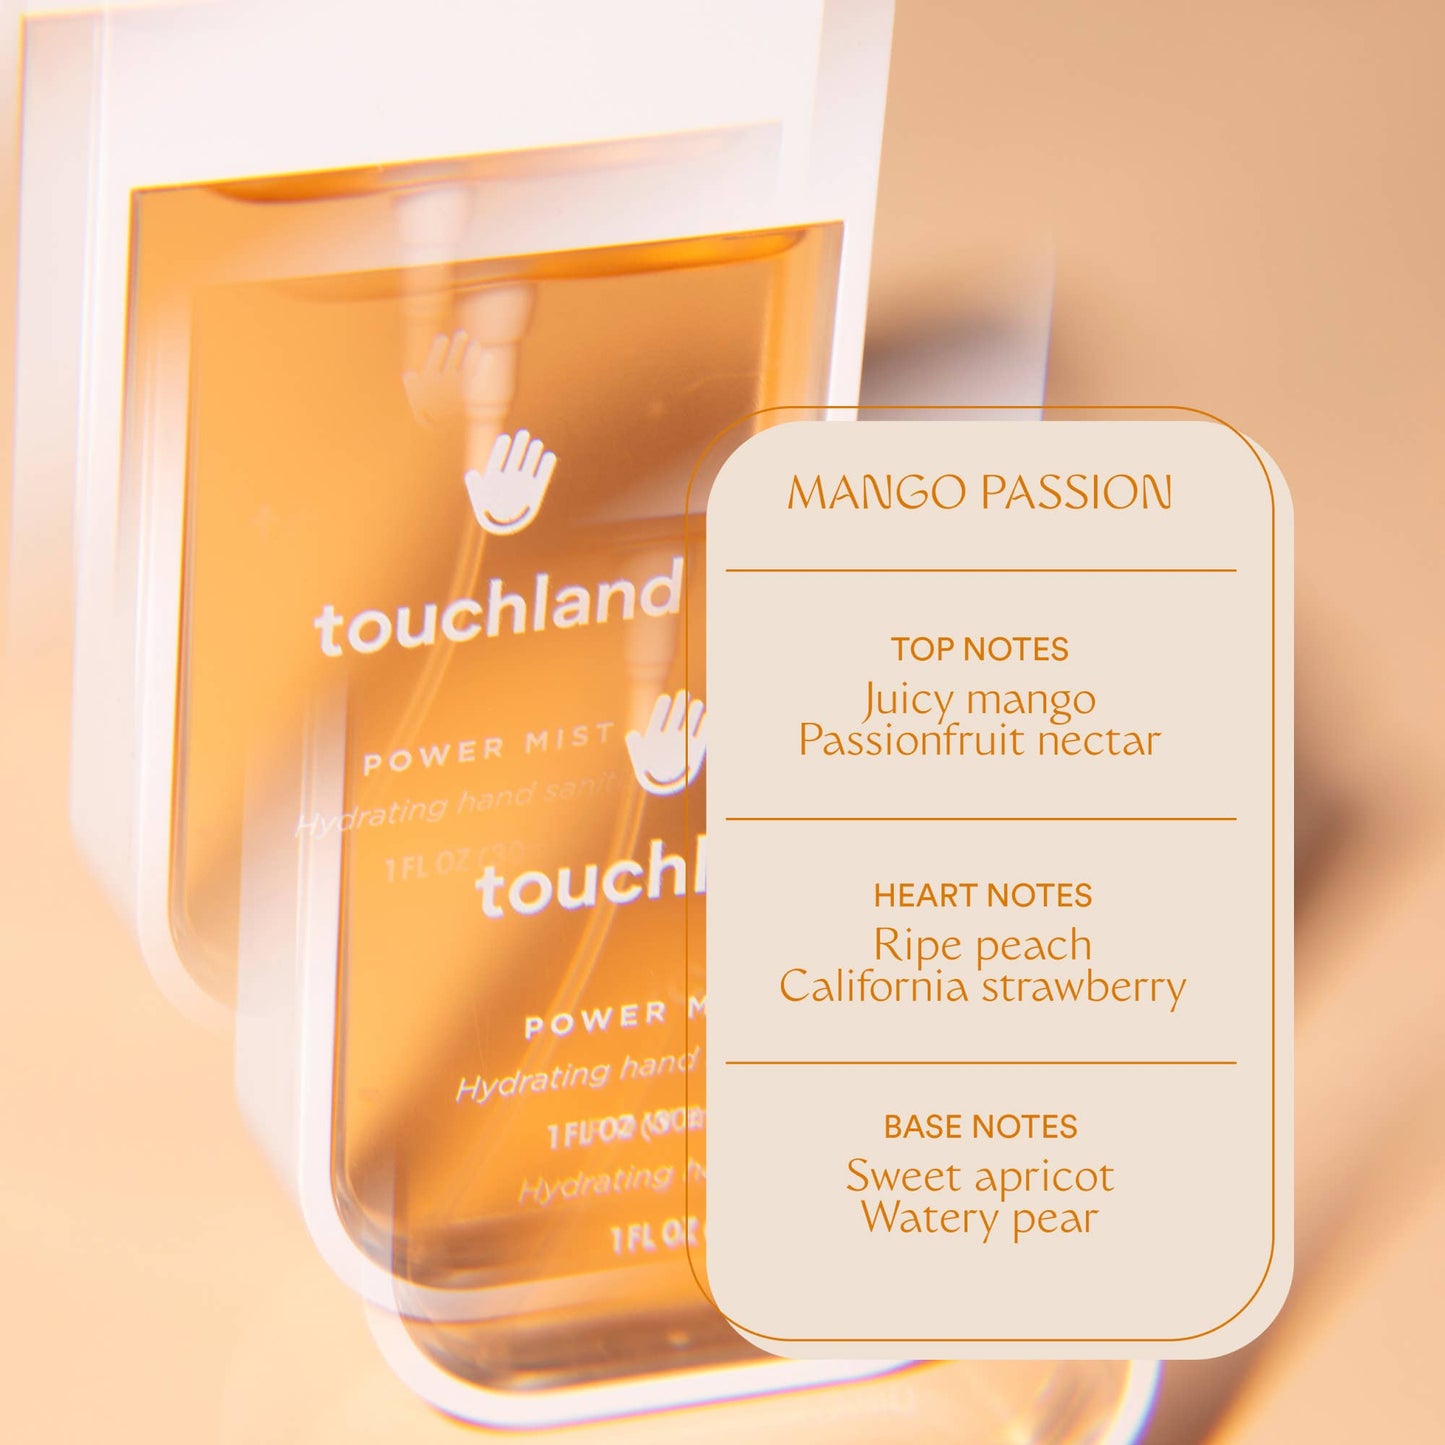 Touchland - Power Mist Mango Passion